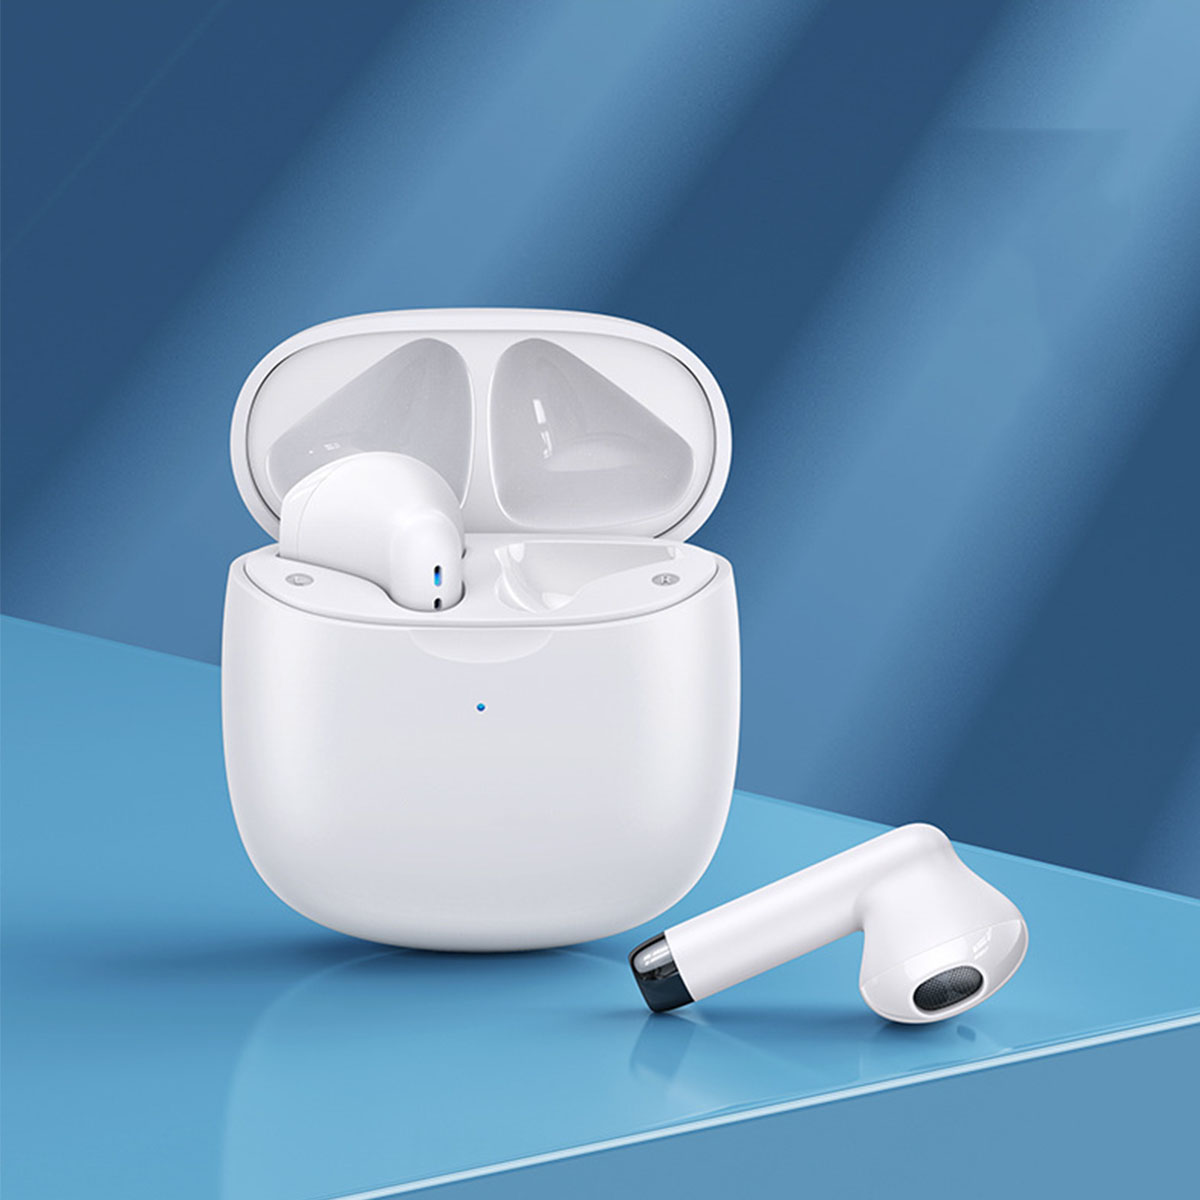 BRIGHTAKE 5.0 Drahtloses Bluetooth-Headset - weiß 3D-Stereoklang, In-ear Headset, Mini Touch-Bedienung, TWS Bluetooth-Kopfhörer